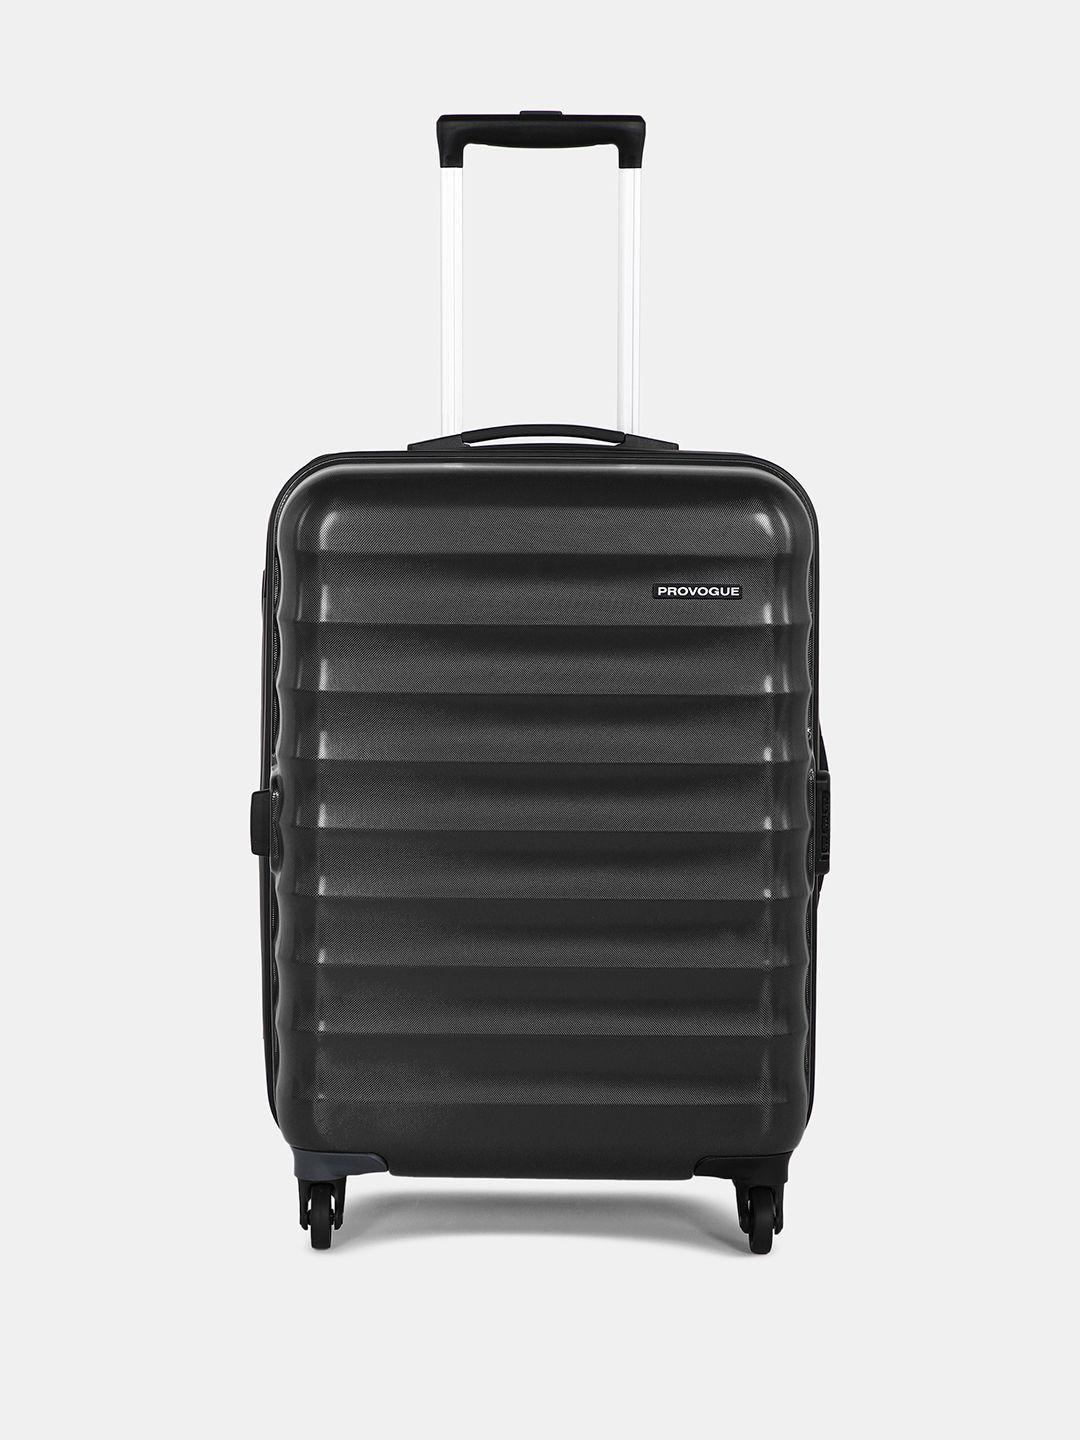 provogue textured medium trolley suitcase